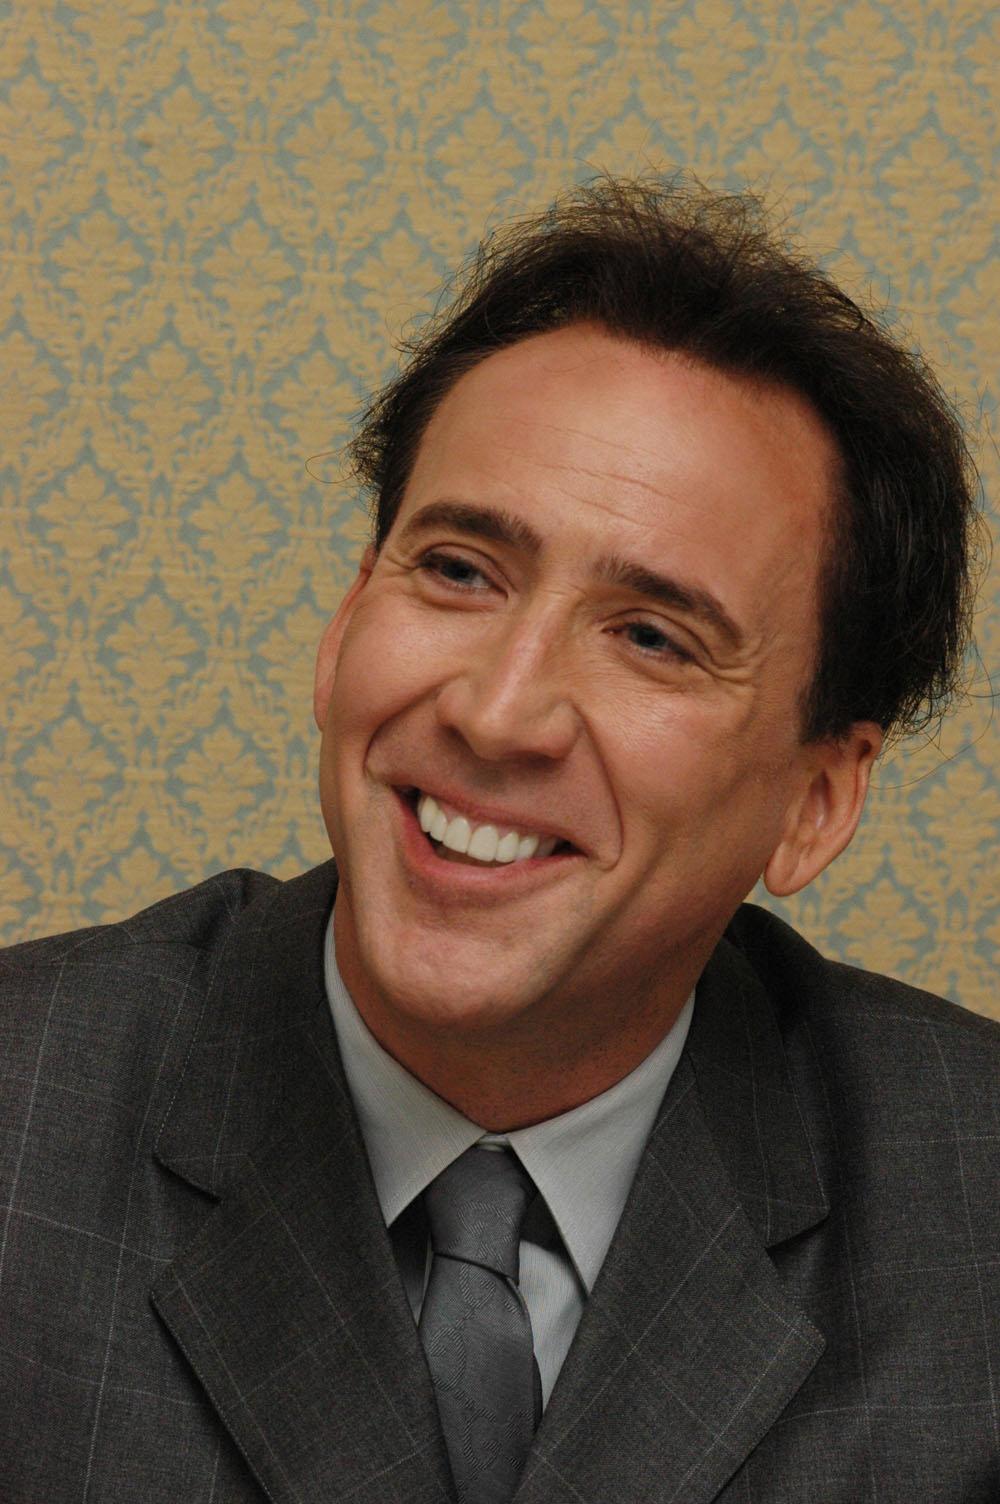 Photo №1509 Nicolas Cage.